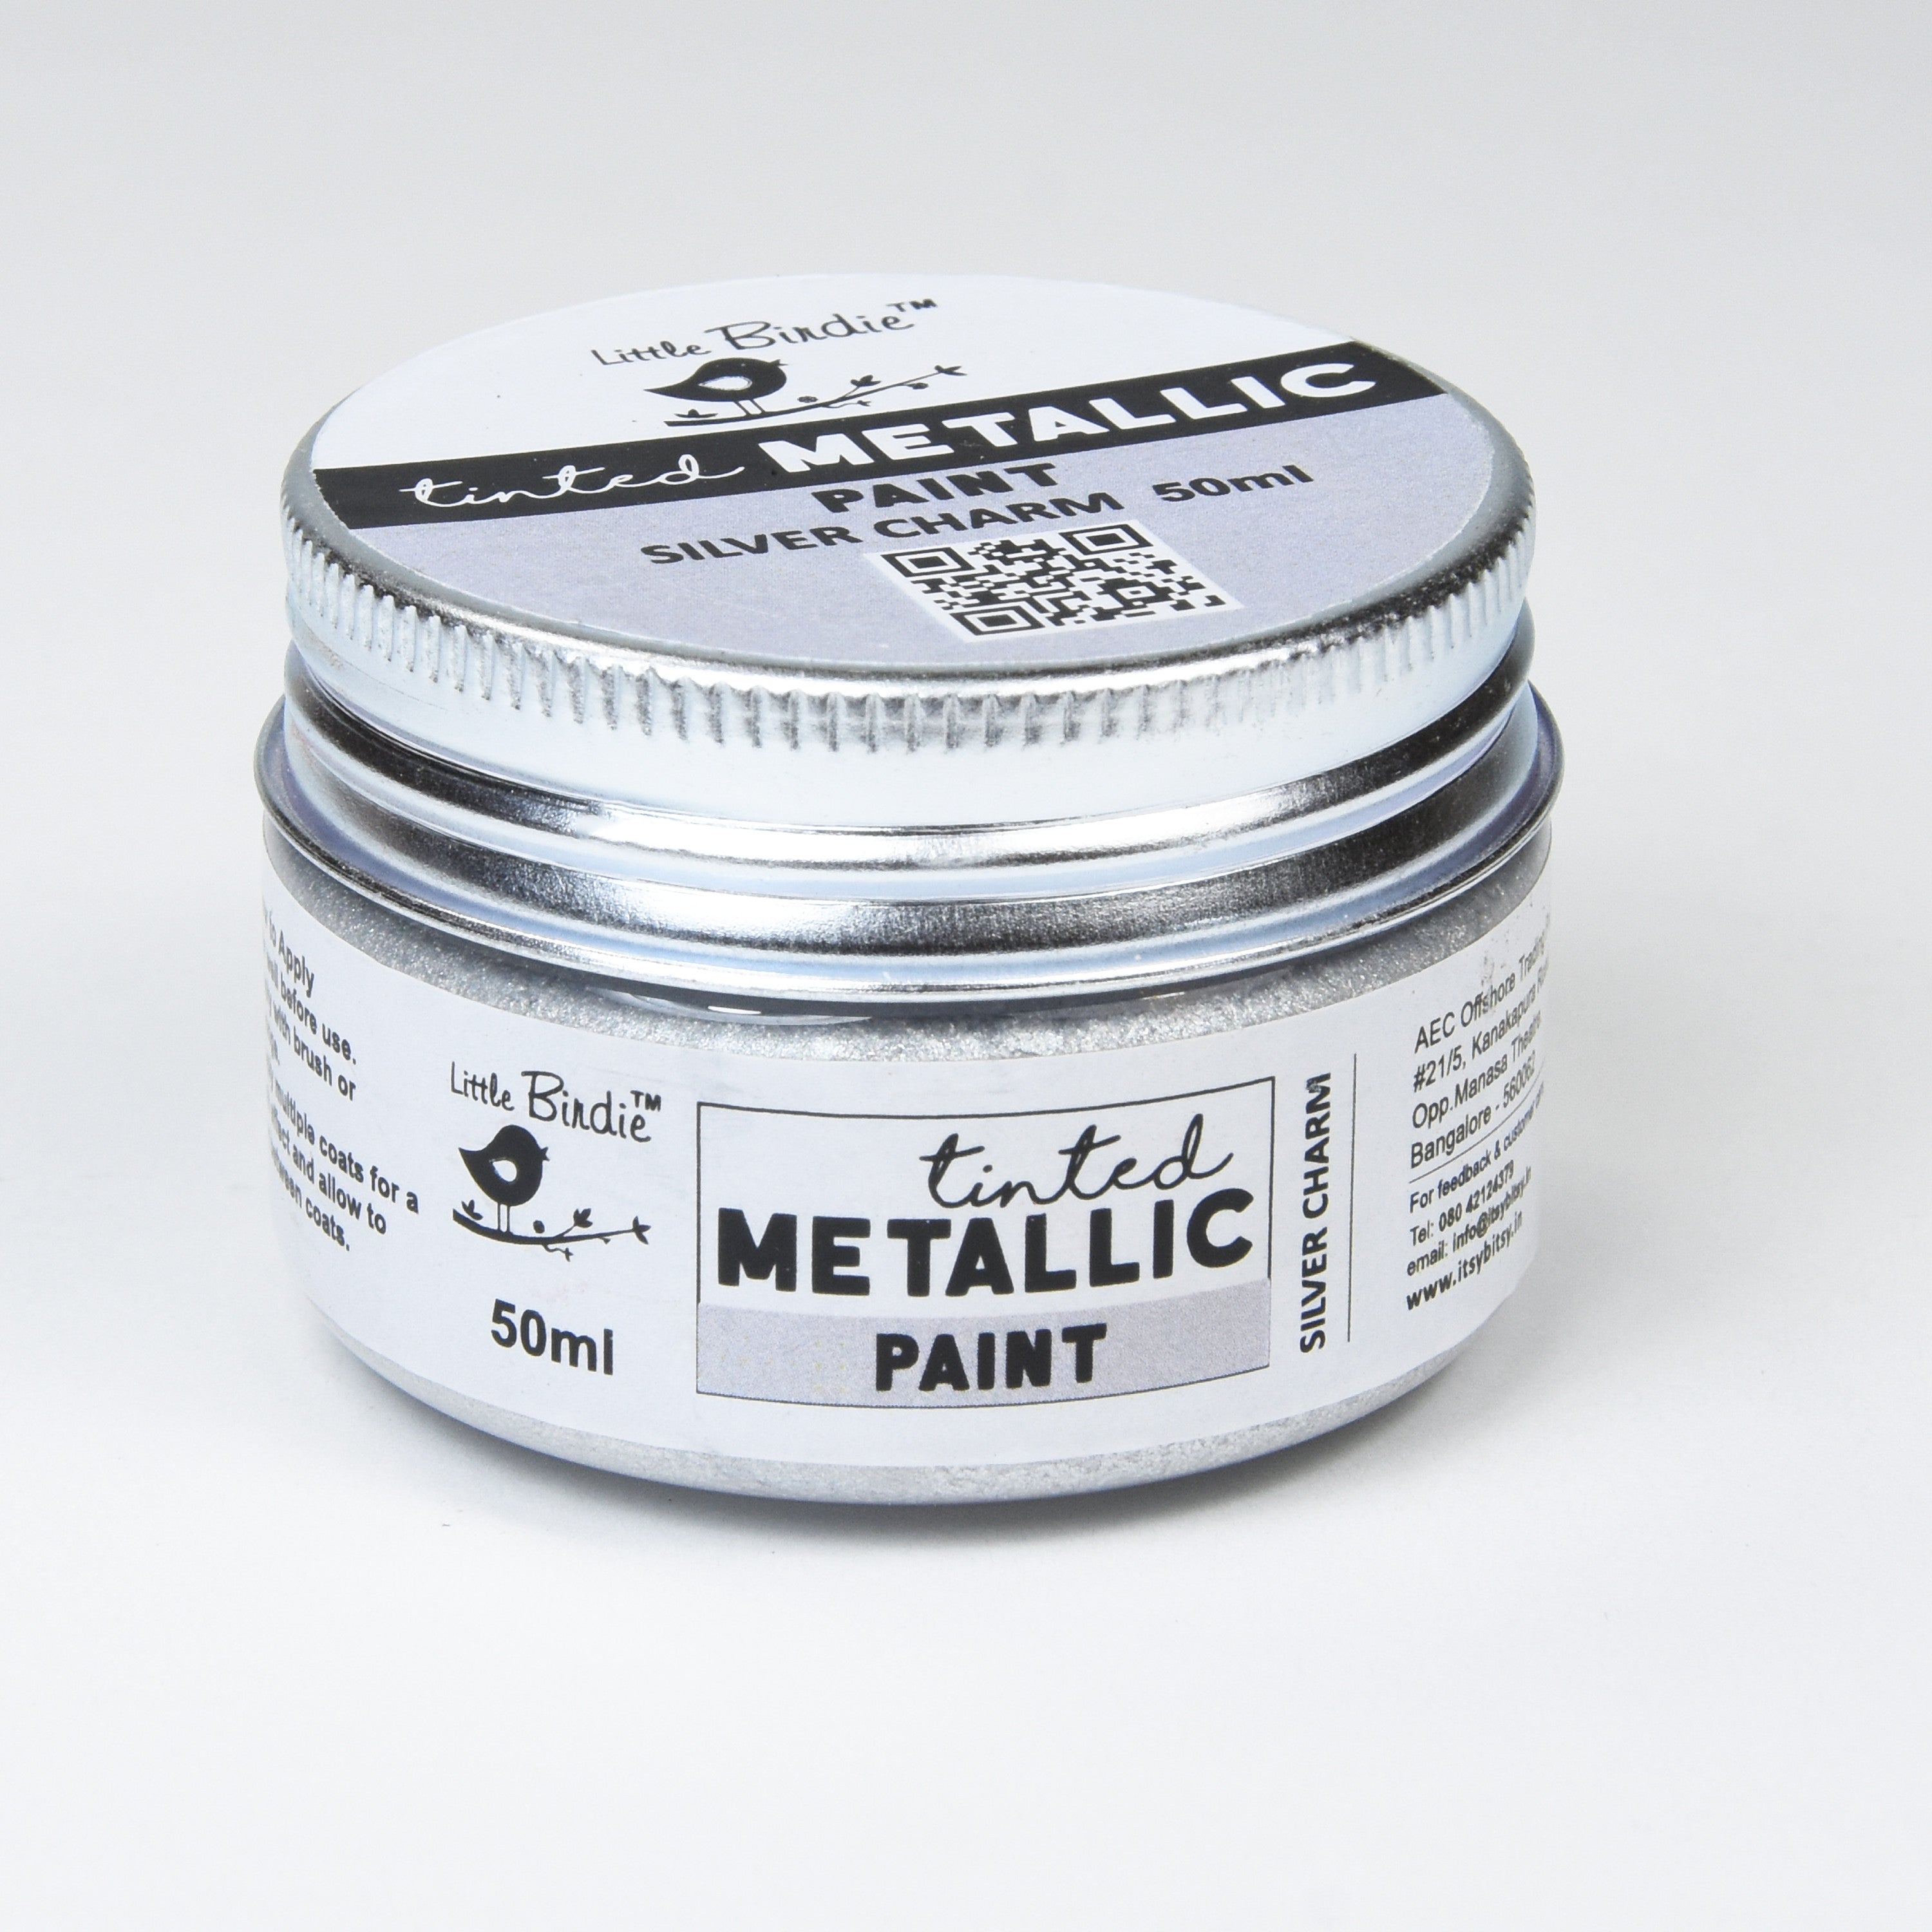 Tinted Metallic Paint Carribean Teal Bottle-50Ml